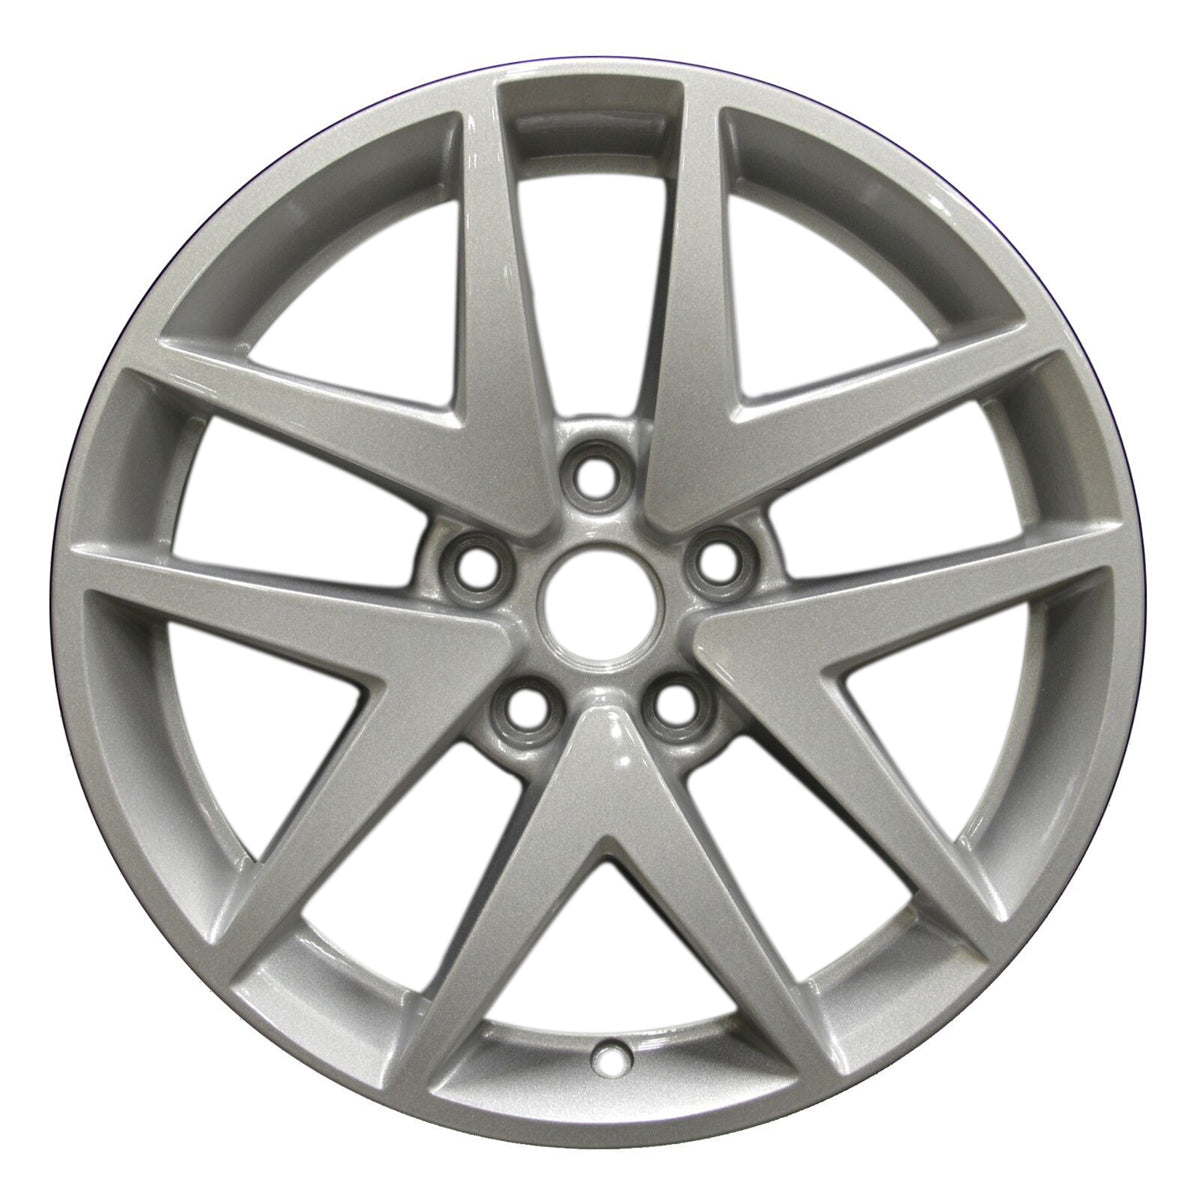 2012 Ford Fusion 17" OEM Wheel Rim W3797S